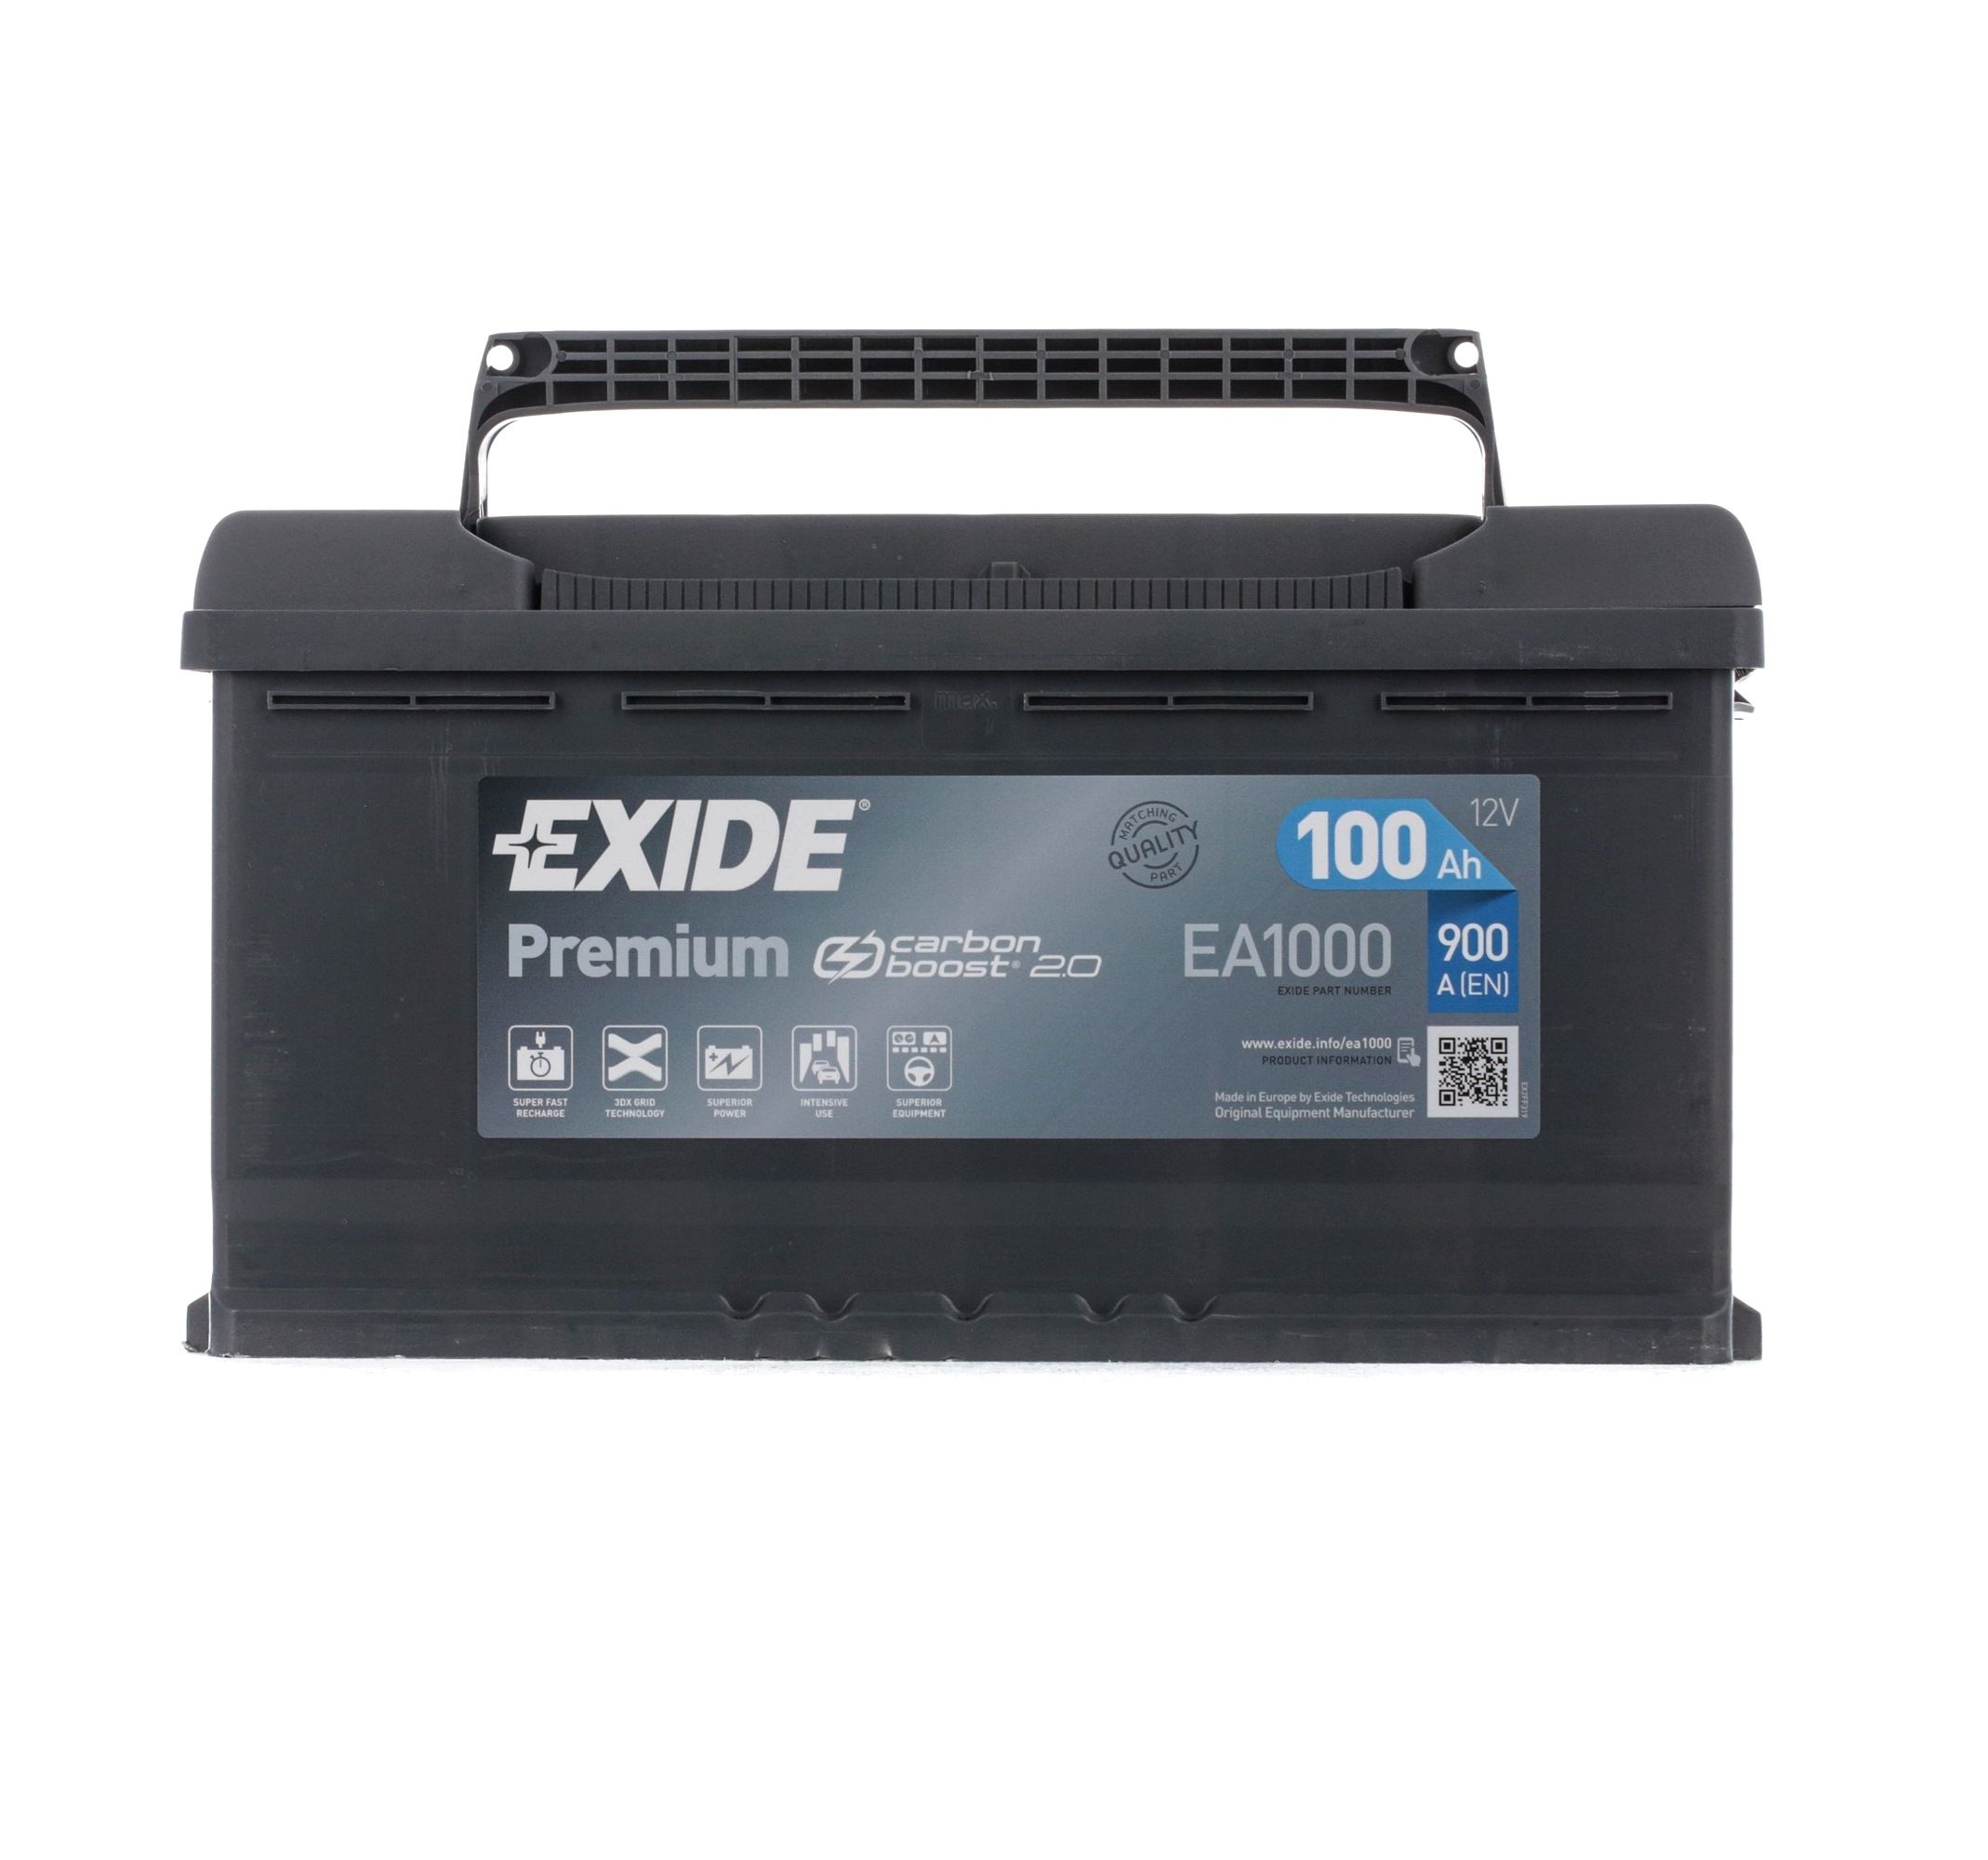 EXIDE EA1000 JAGUAR Starterbatterie 12V 100Ah 900A B13 Bleiakkumulator